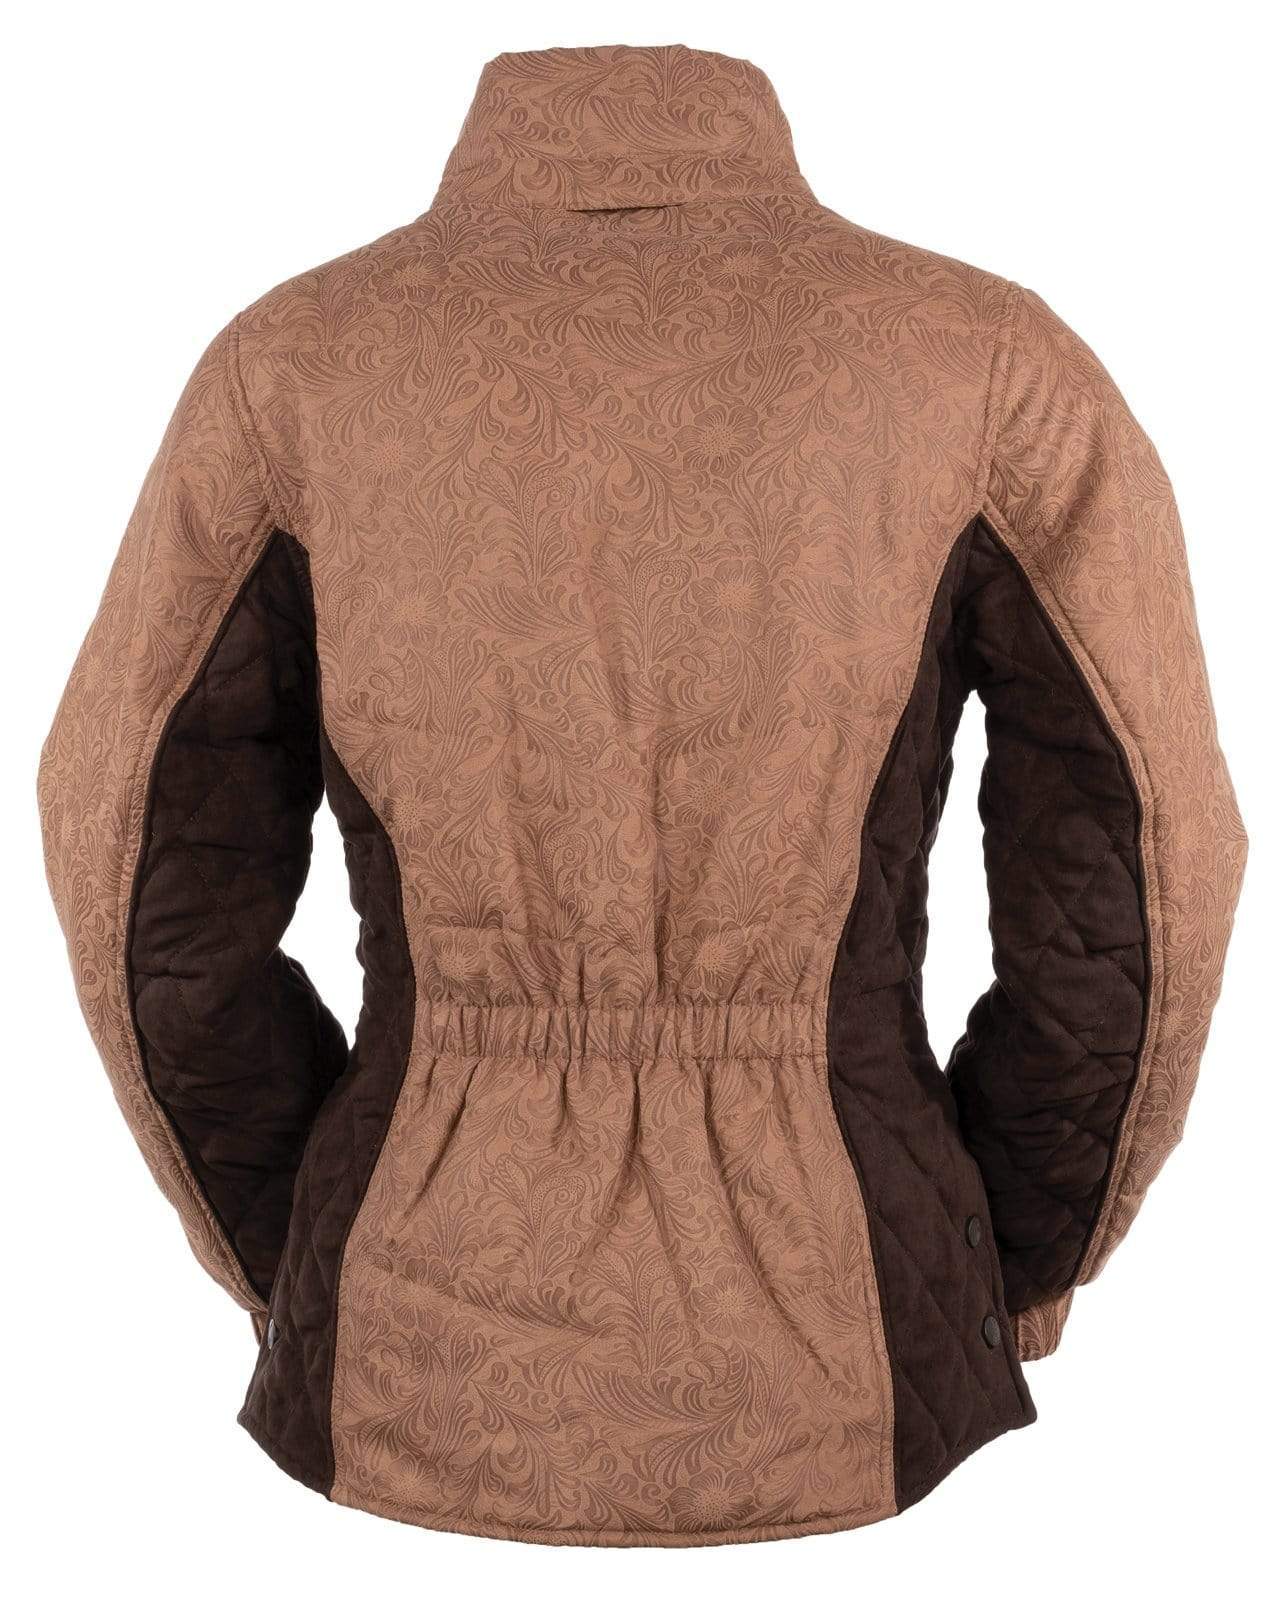 Outback Trading Company Women’s Burlington Jacket Coats & Jackets